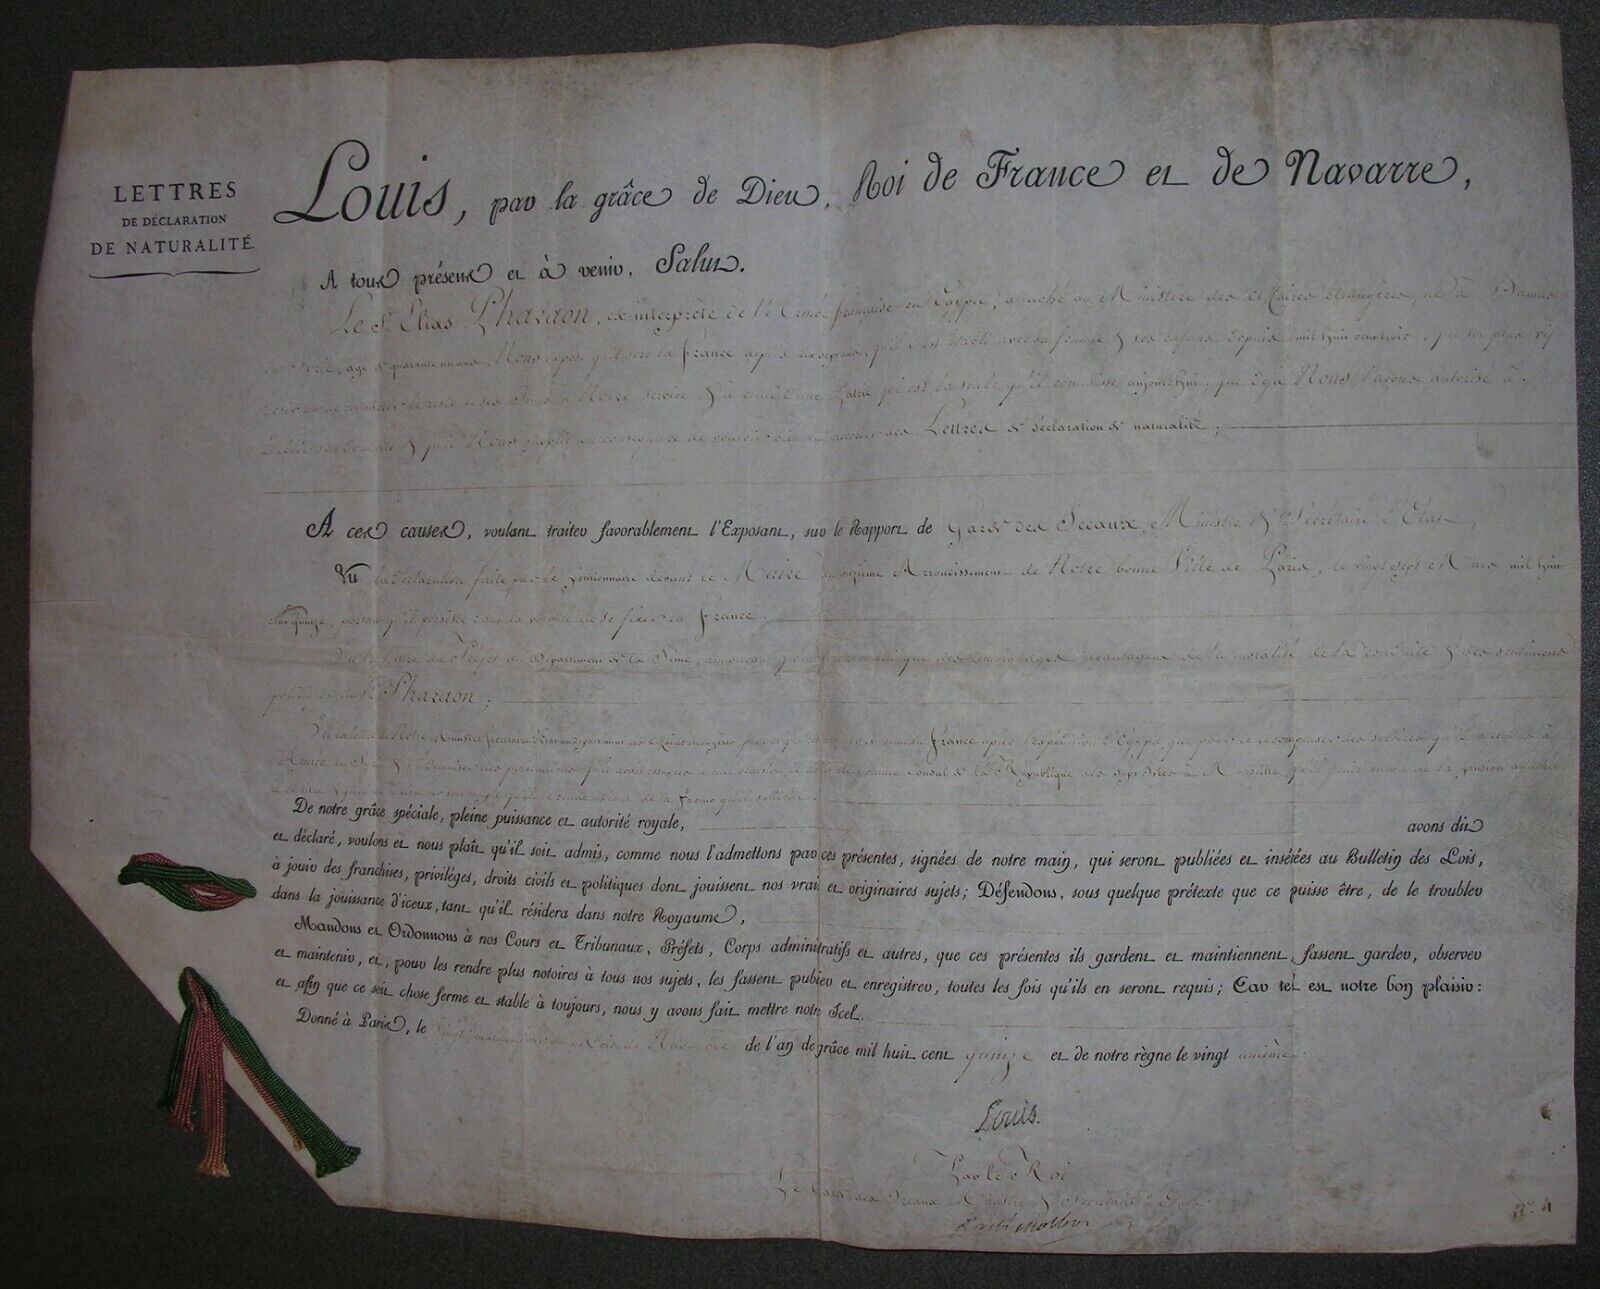 Elias pharaoh. interprètre grand army. naturalized louis xviii Barbé-marbois. 1815